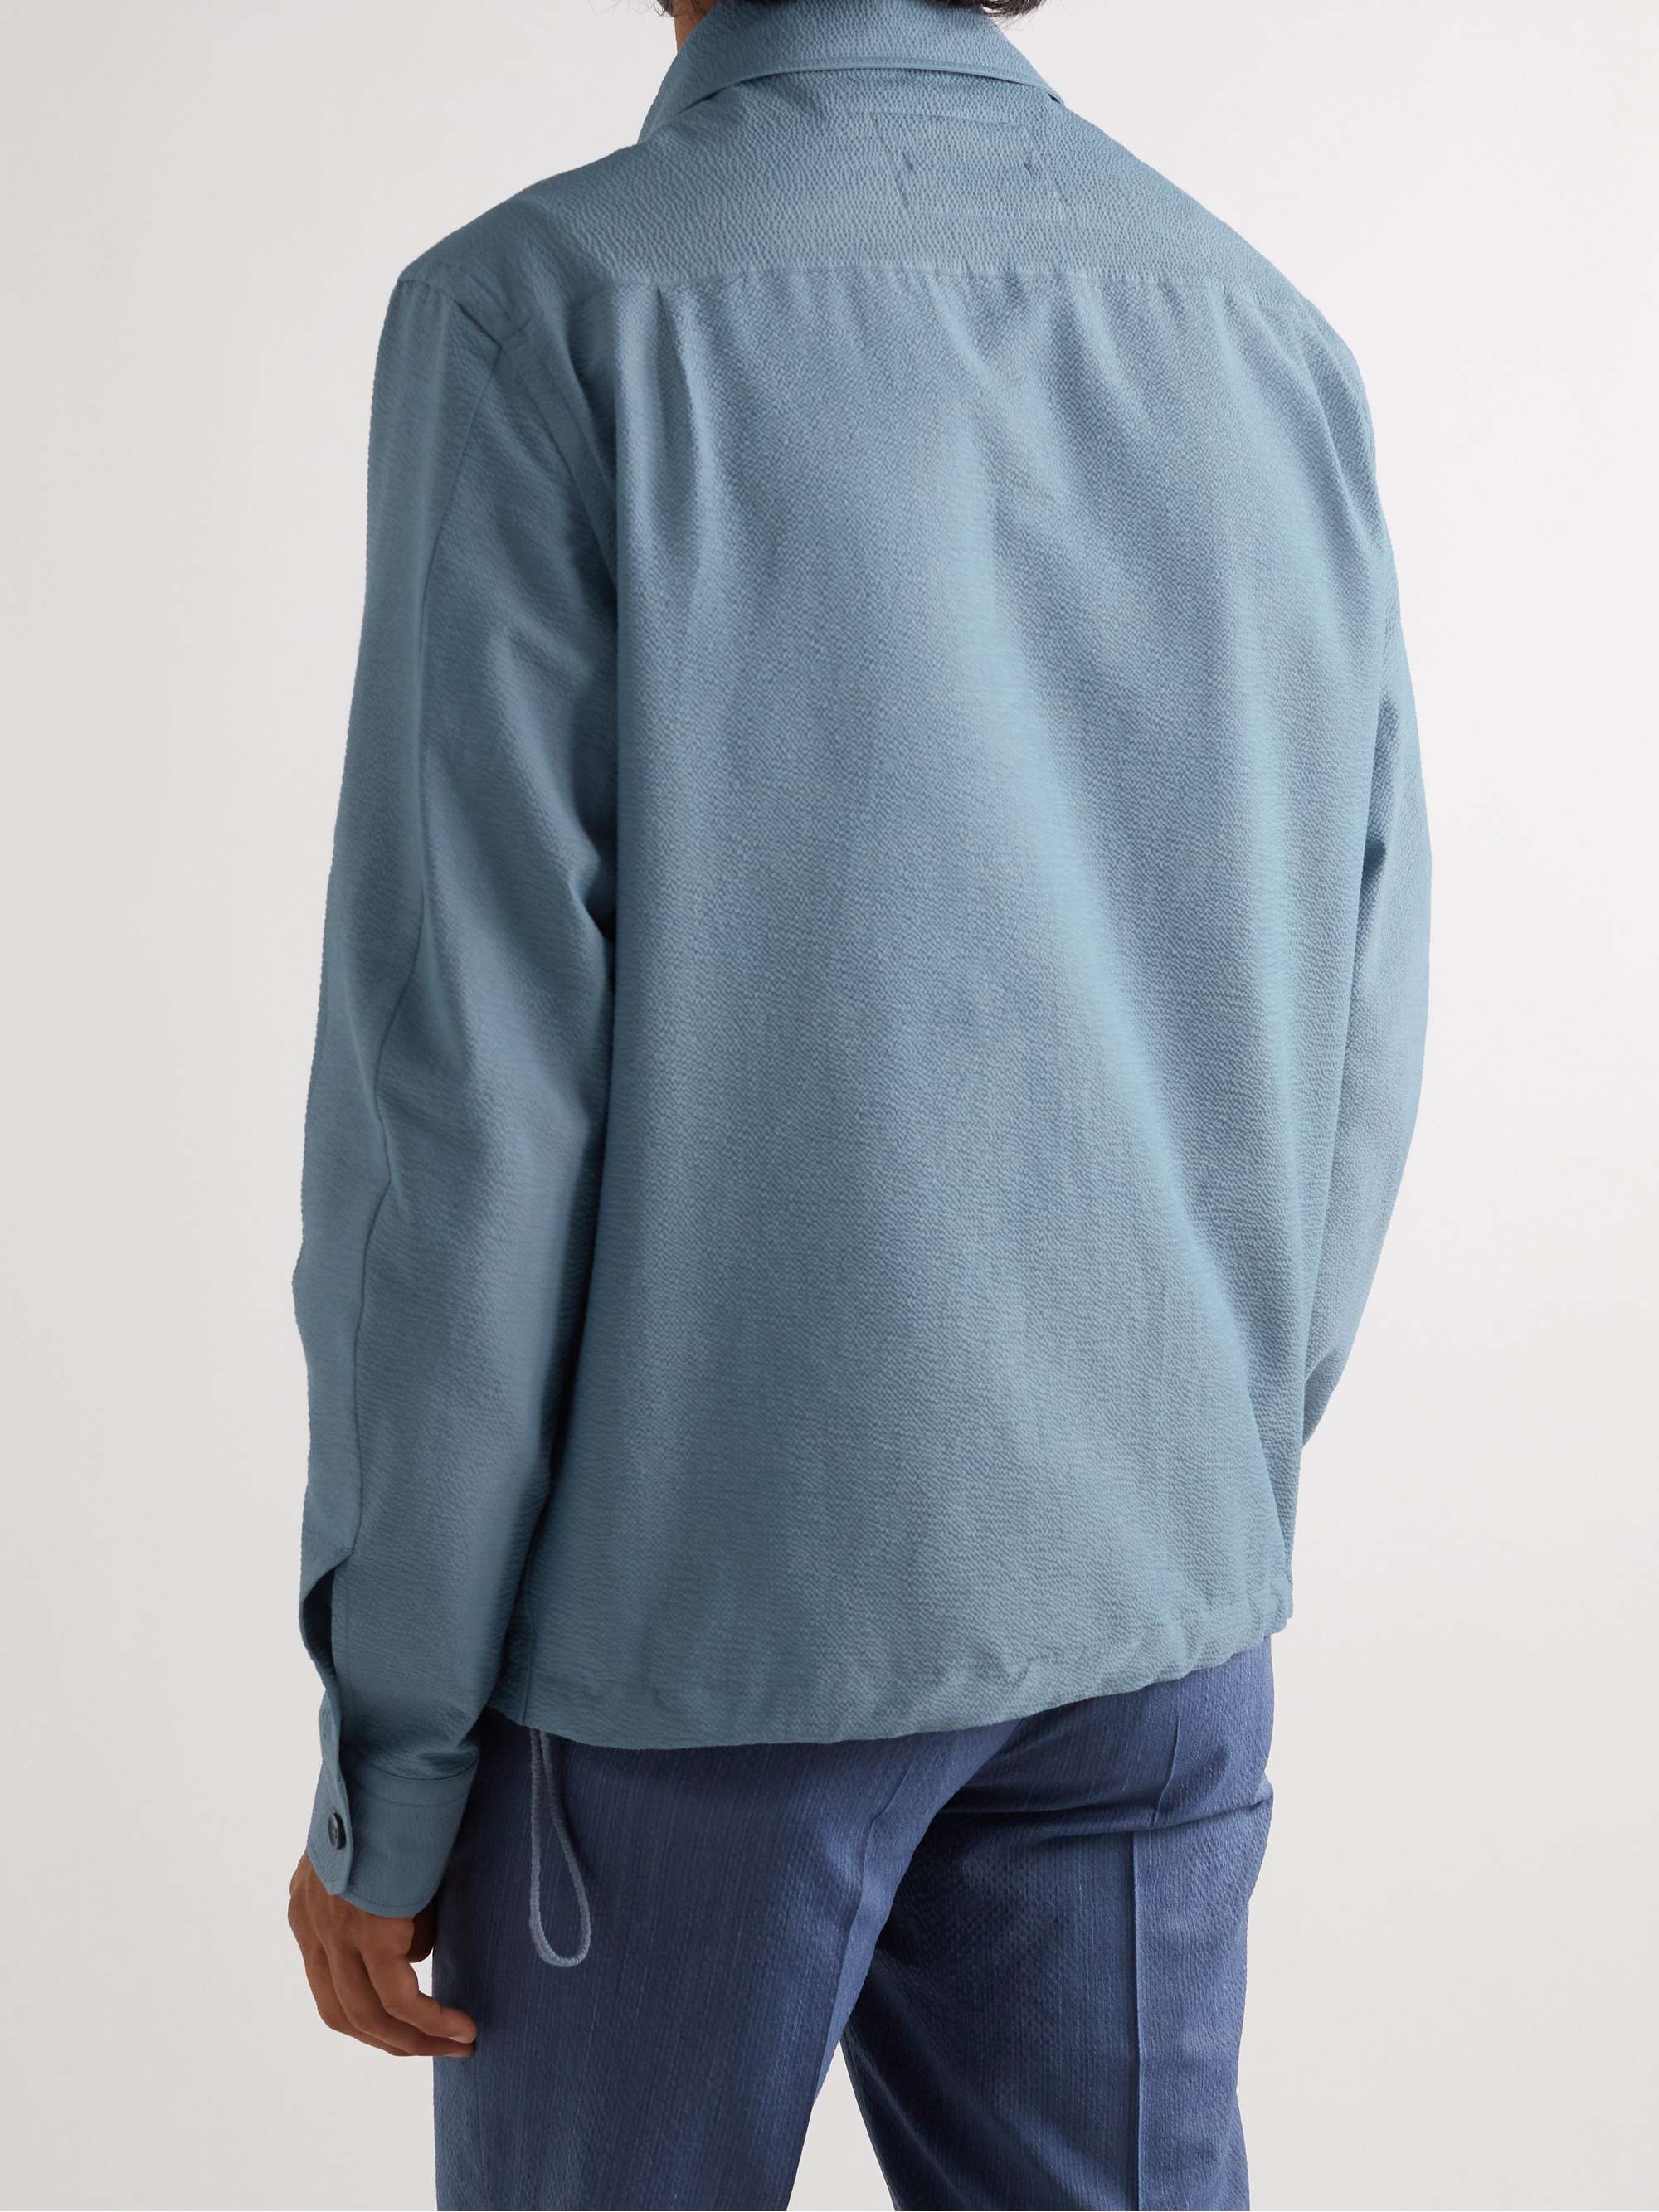 ZEGNA Cotton-Blend Seersucker Overshirt